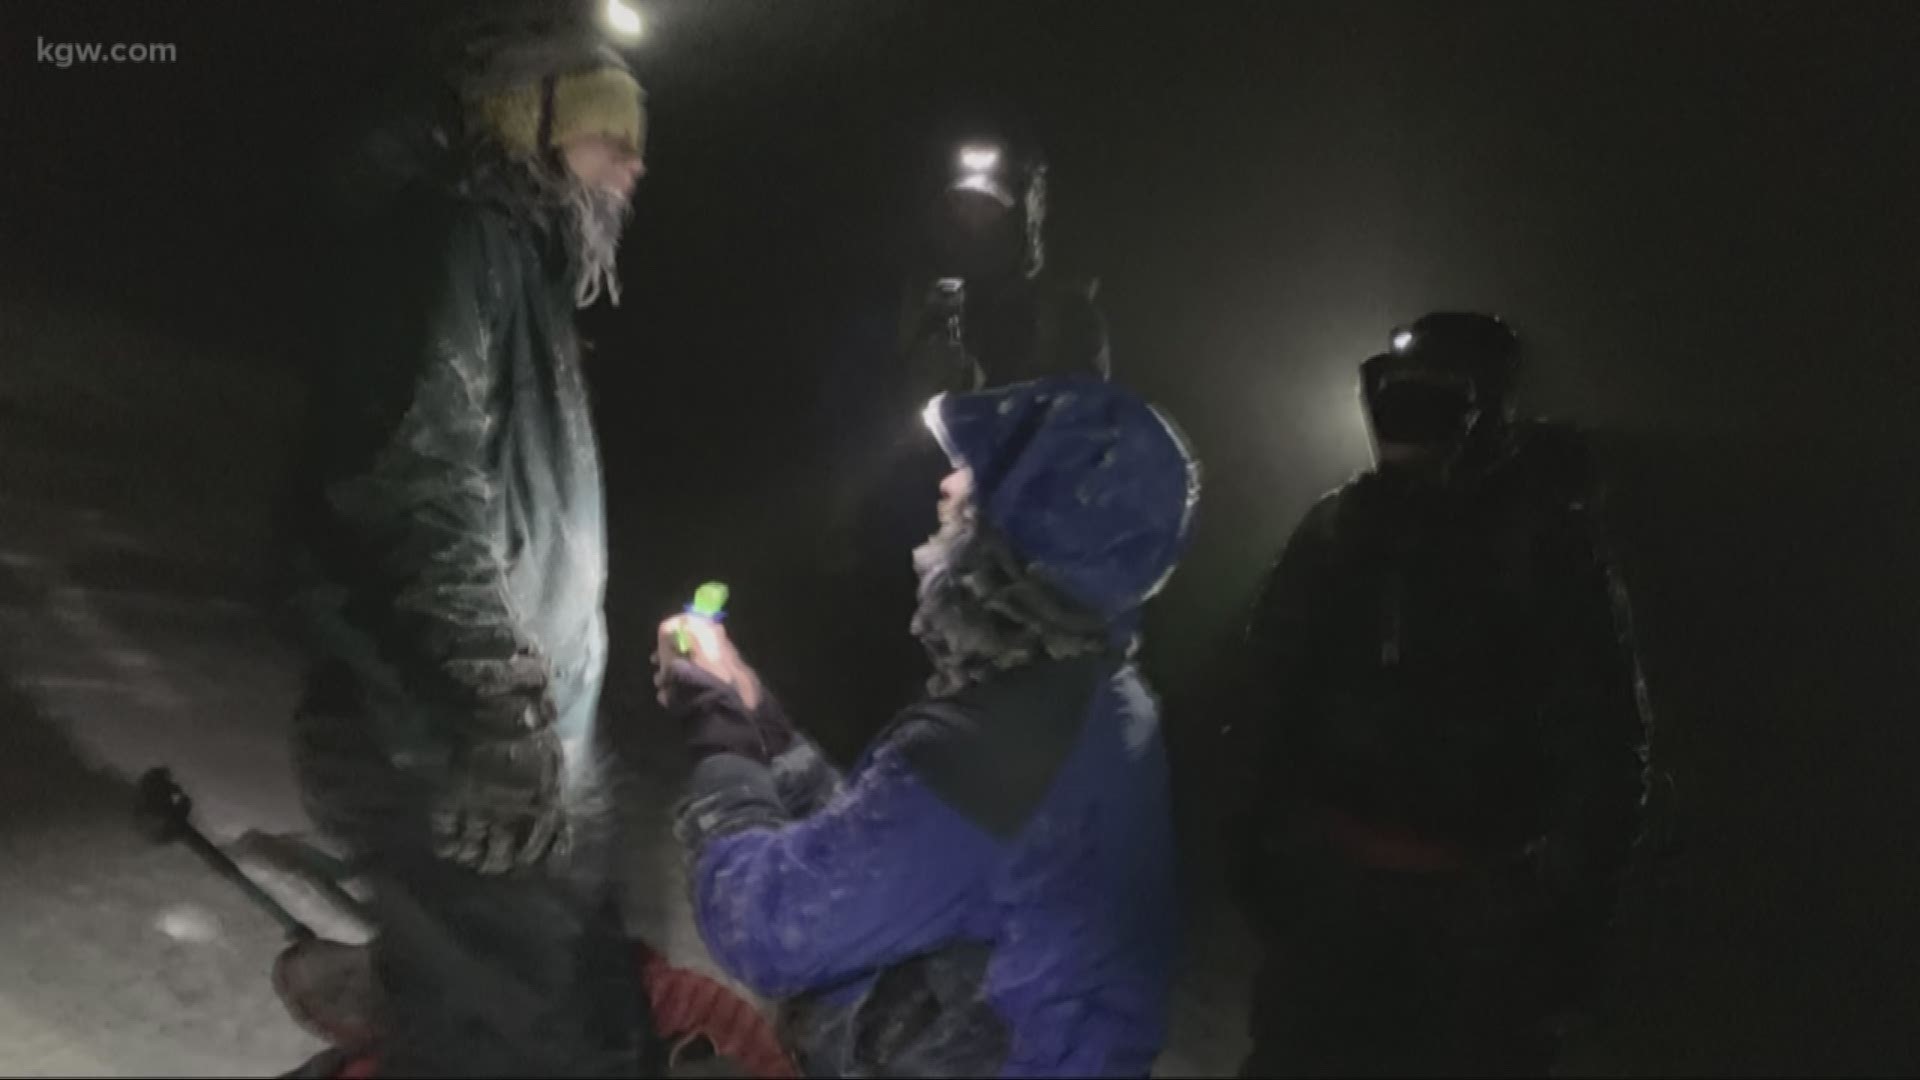 A proposal caught on camera 9,050 feet up Mount Hood.